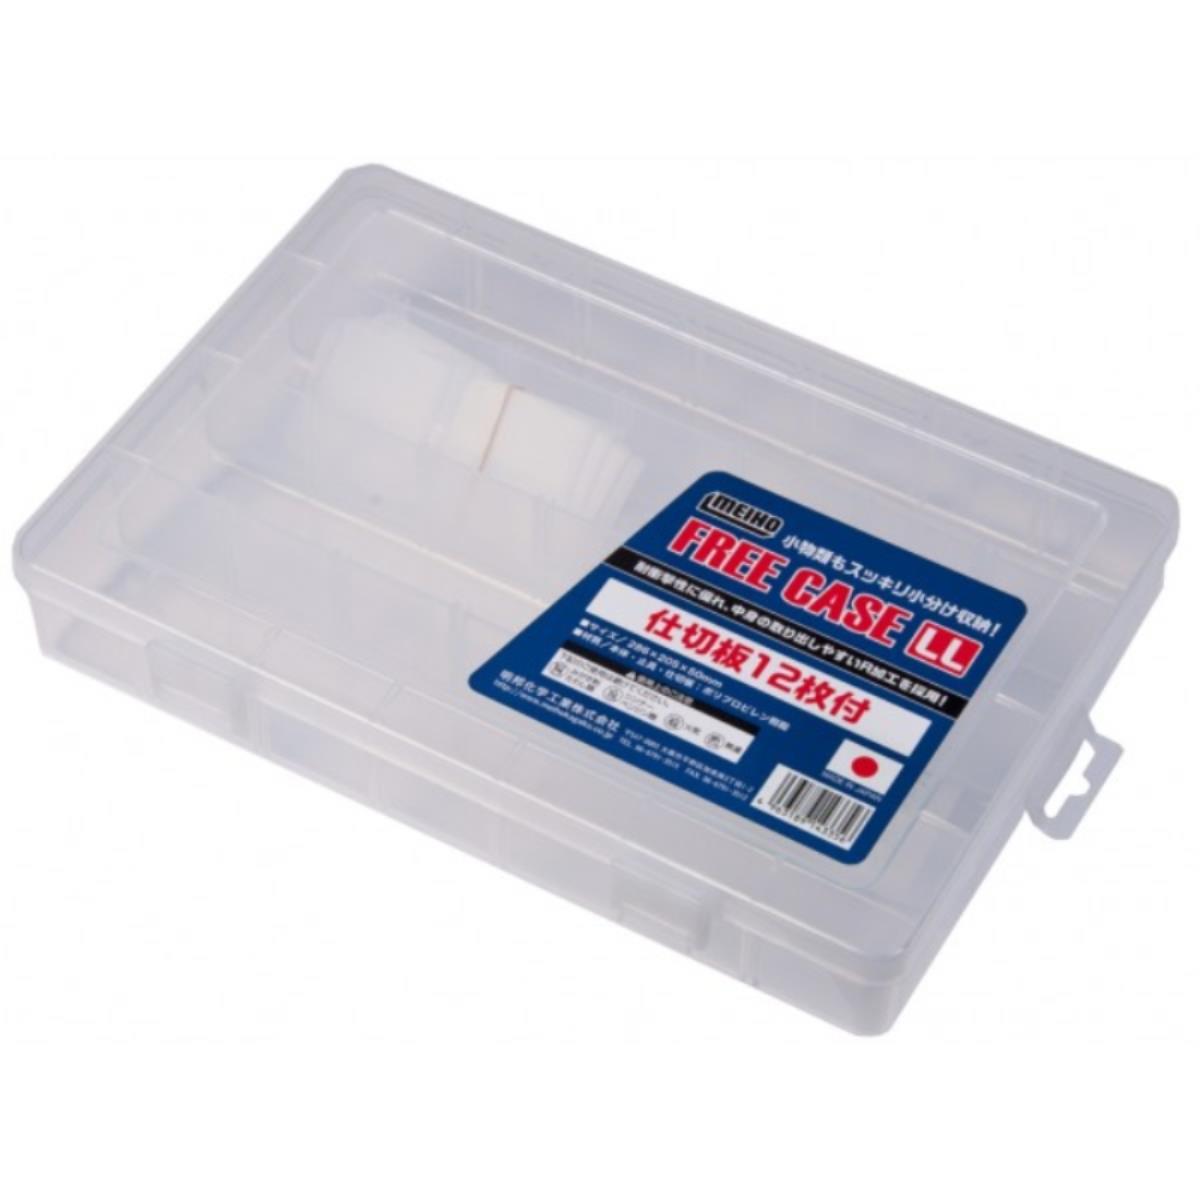 Коробка рыболовная FREE CASE LL 286х205х50 (FEEDER-1600) Meiho пакет коробка холодное сердце 40х30х15 см